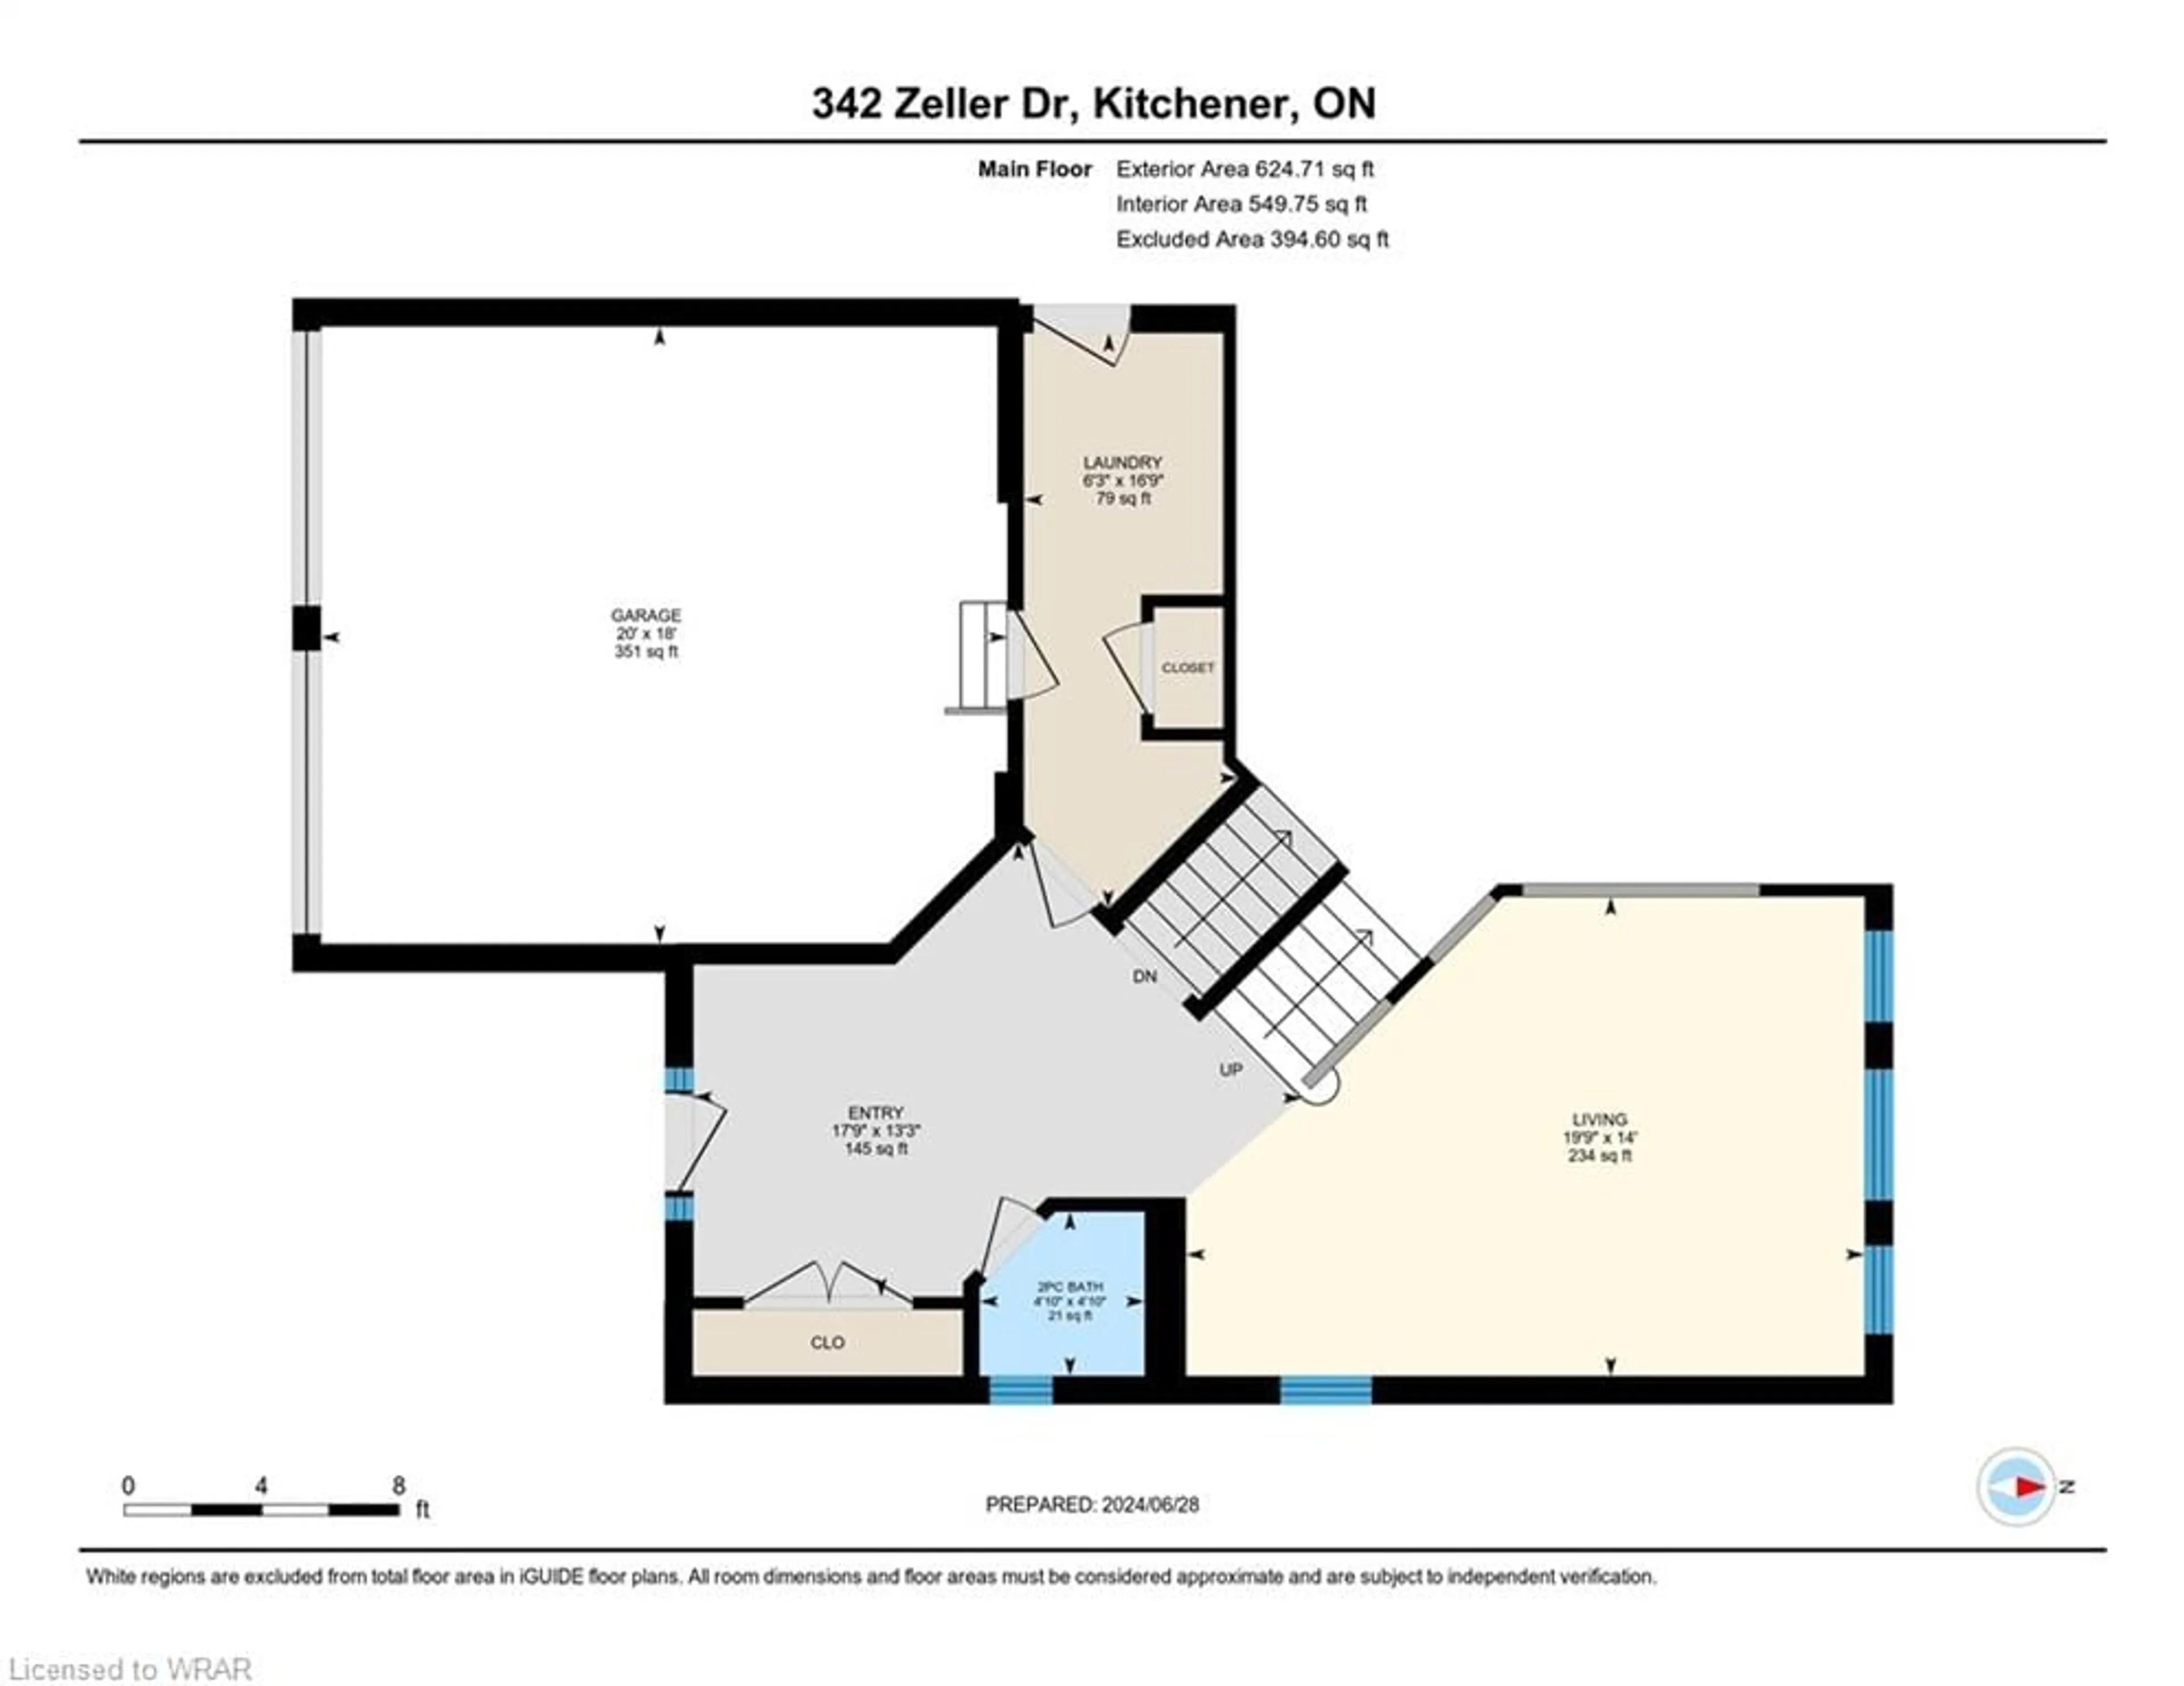 Floor plan for 342 Zeller Dr, Kitchener Ontario N2A 0B5